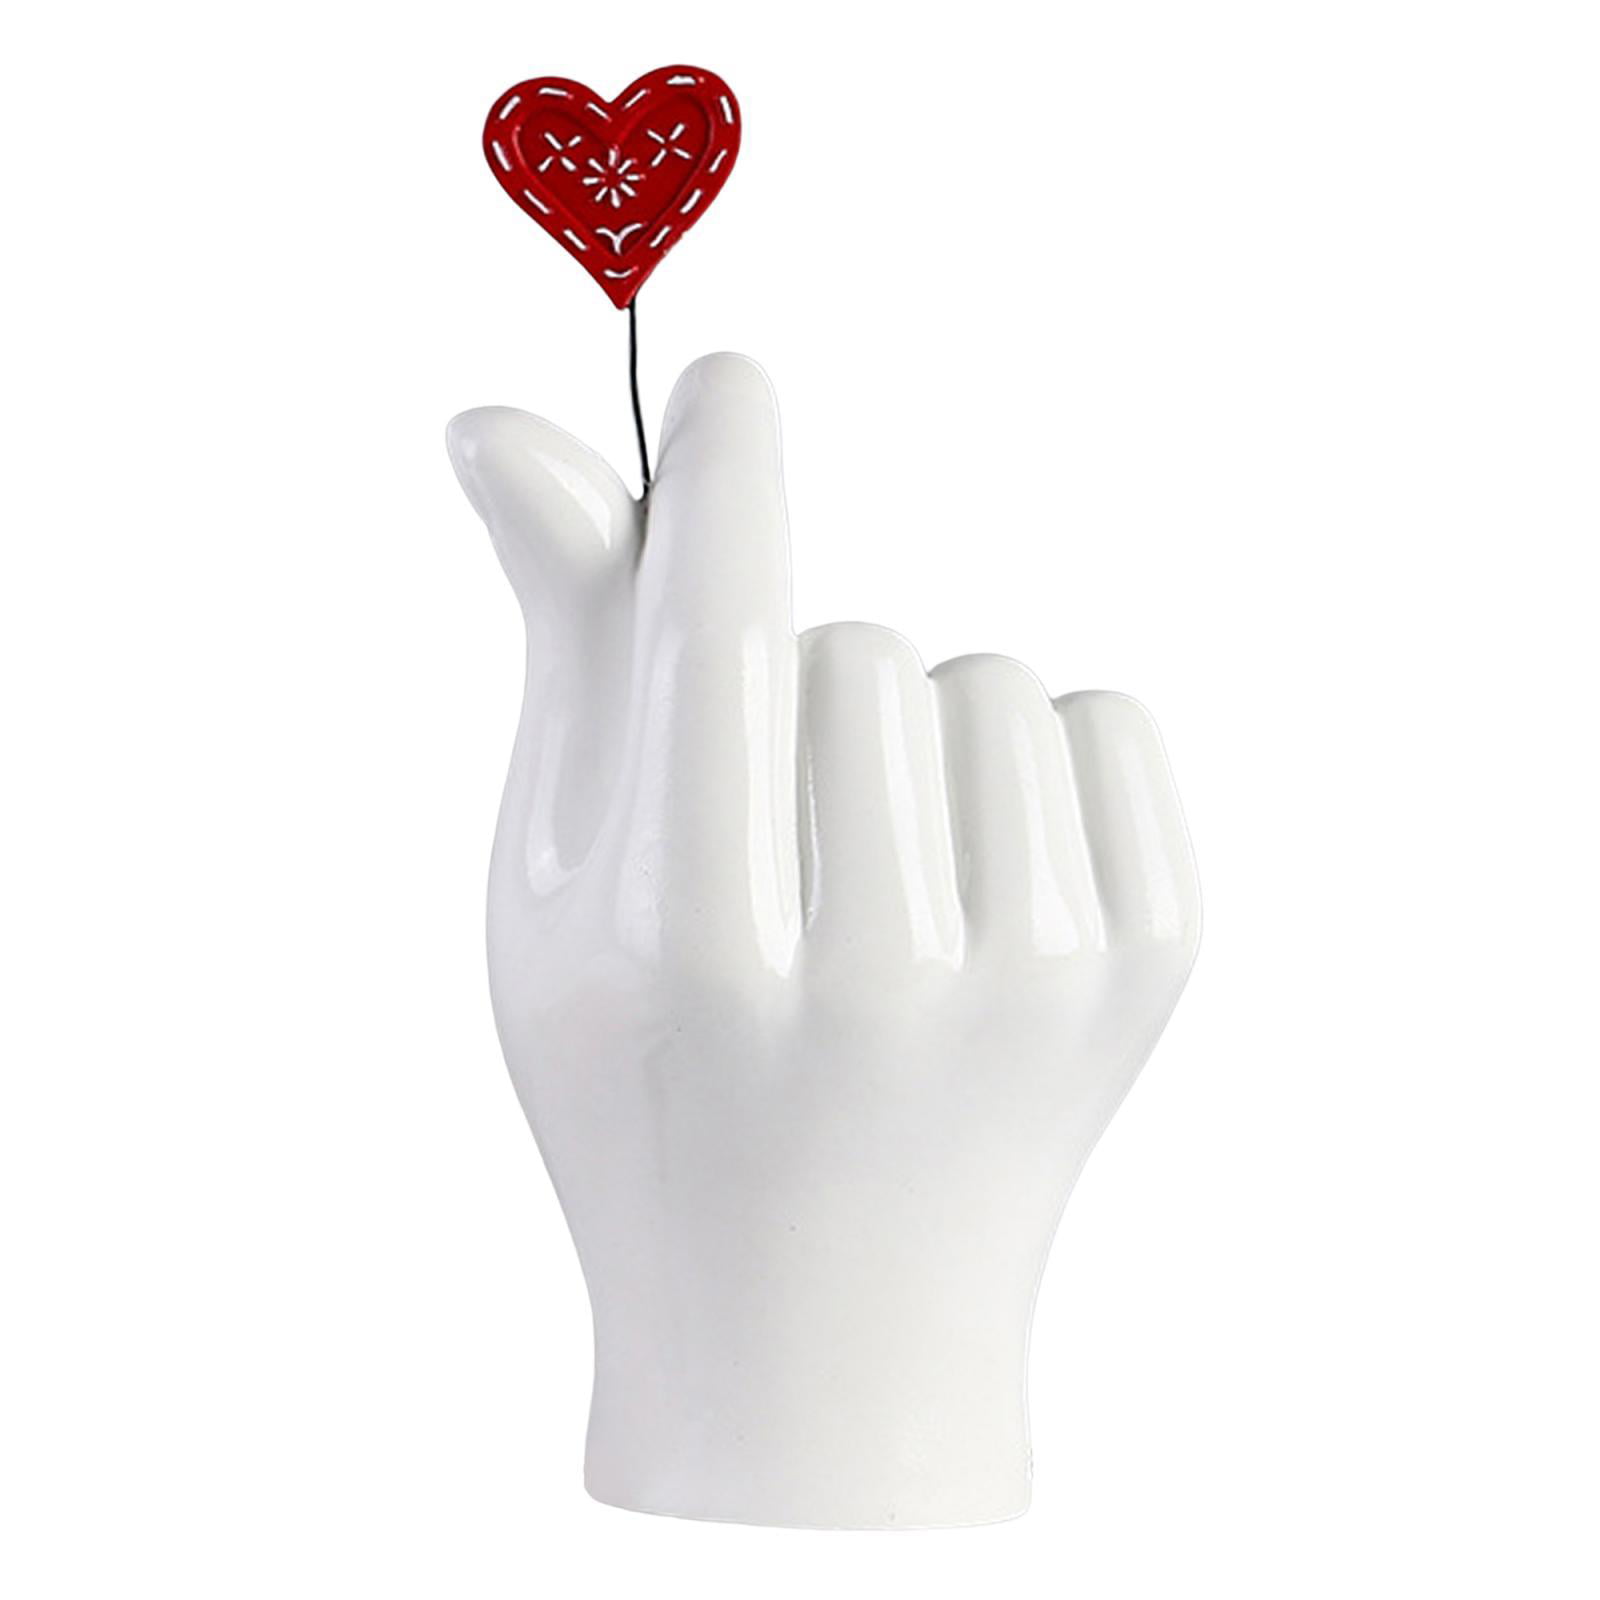 OTARTU Golden Gesture Heart Hands Sculpture Decoration, Modern Love Statue Finger Home Decor, Abstract Art Sculpture Home Wedding Decoration,Shelf